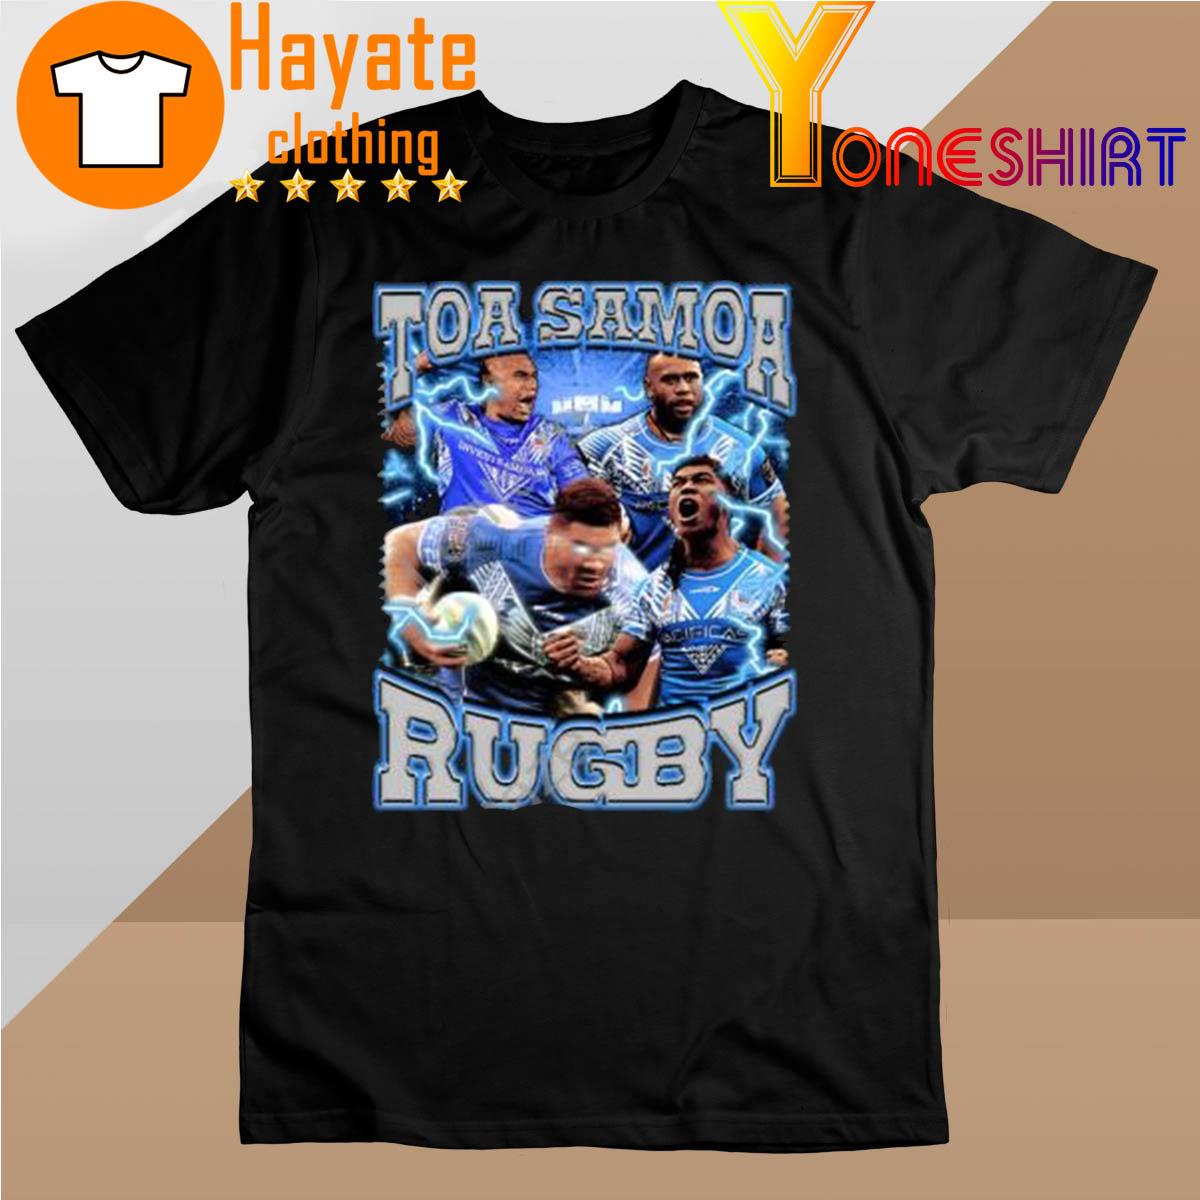 Toa Samoa Rugby Shirt